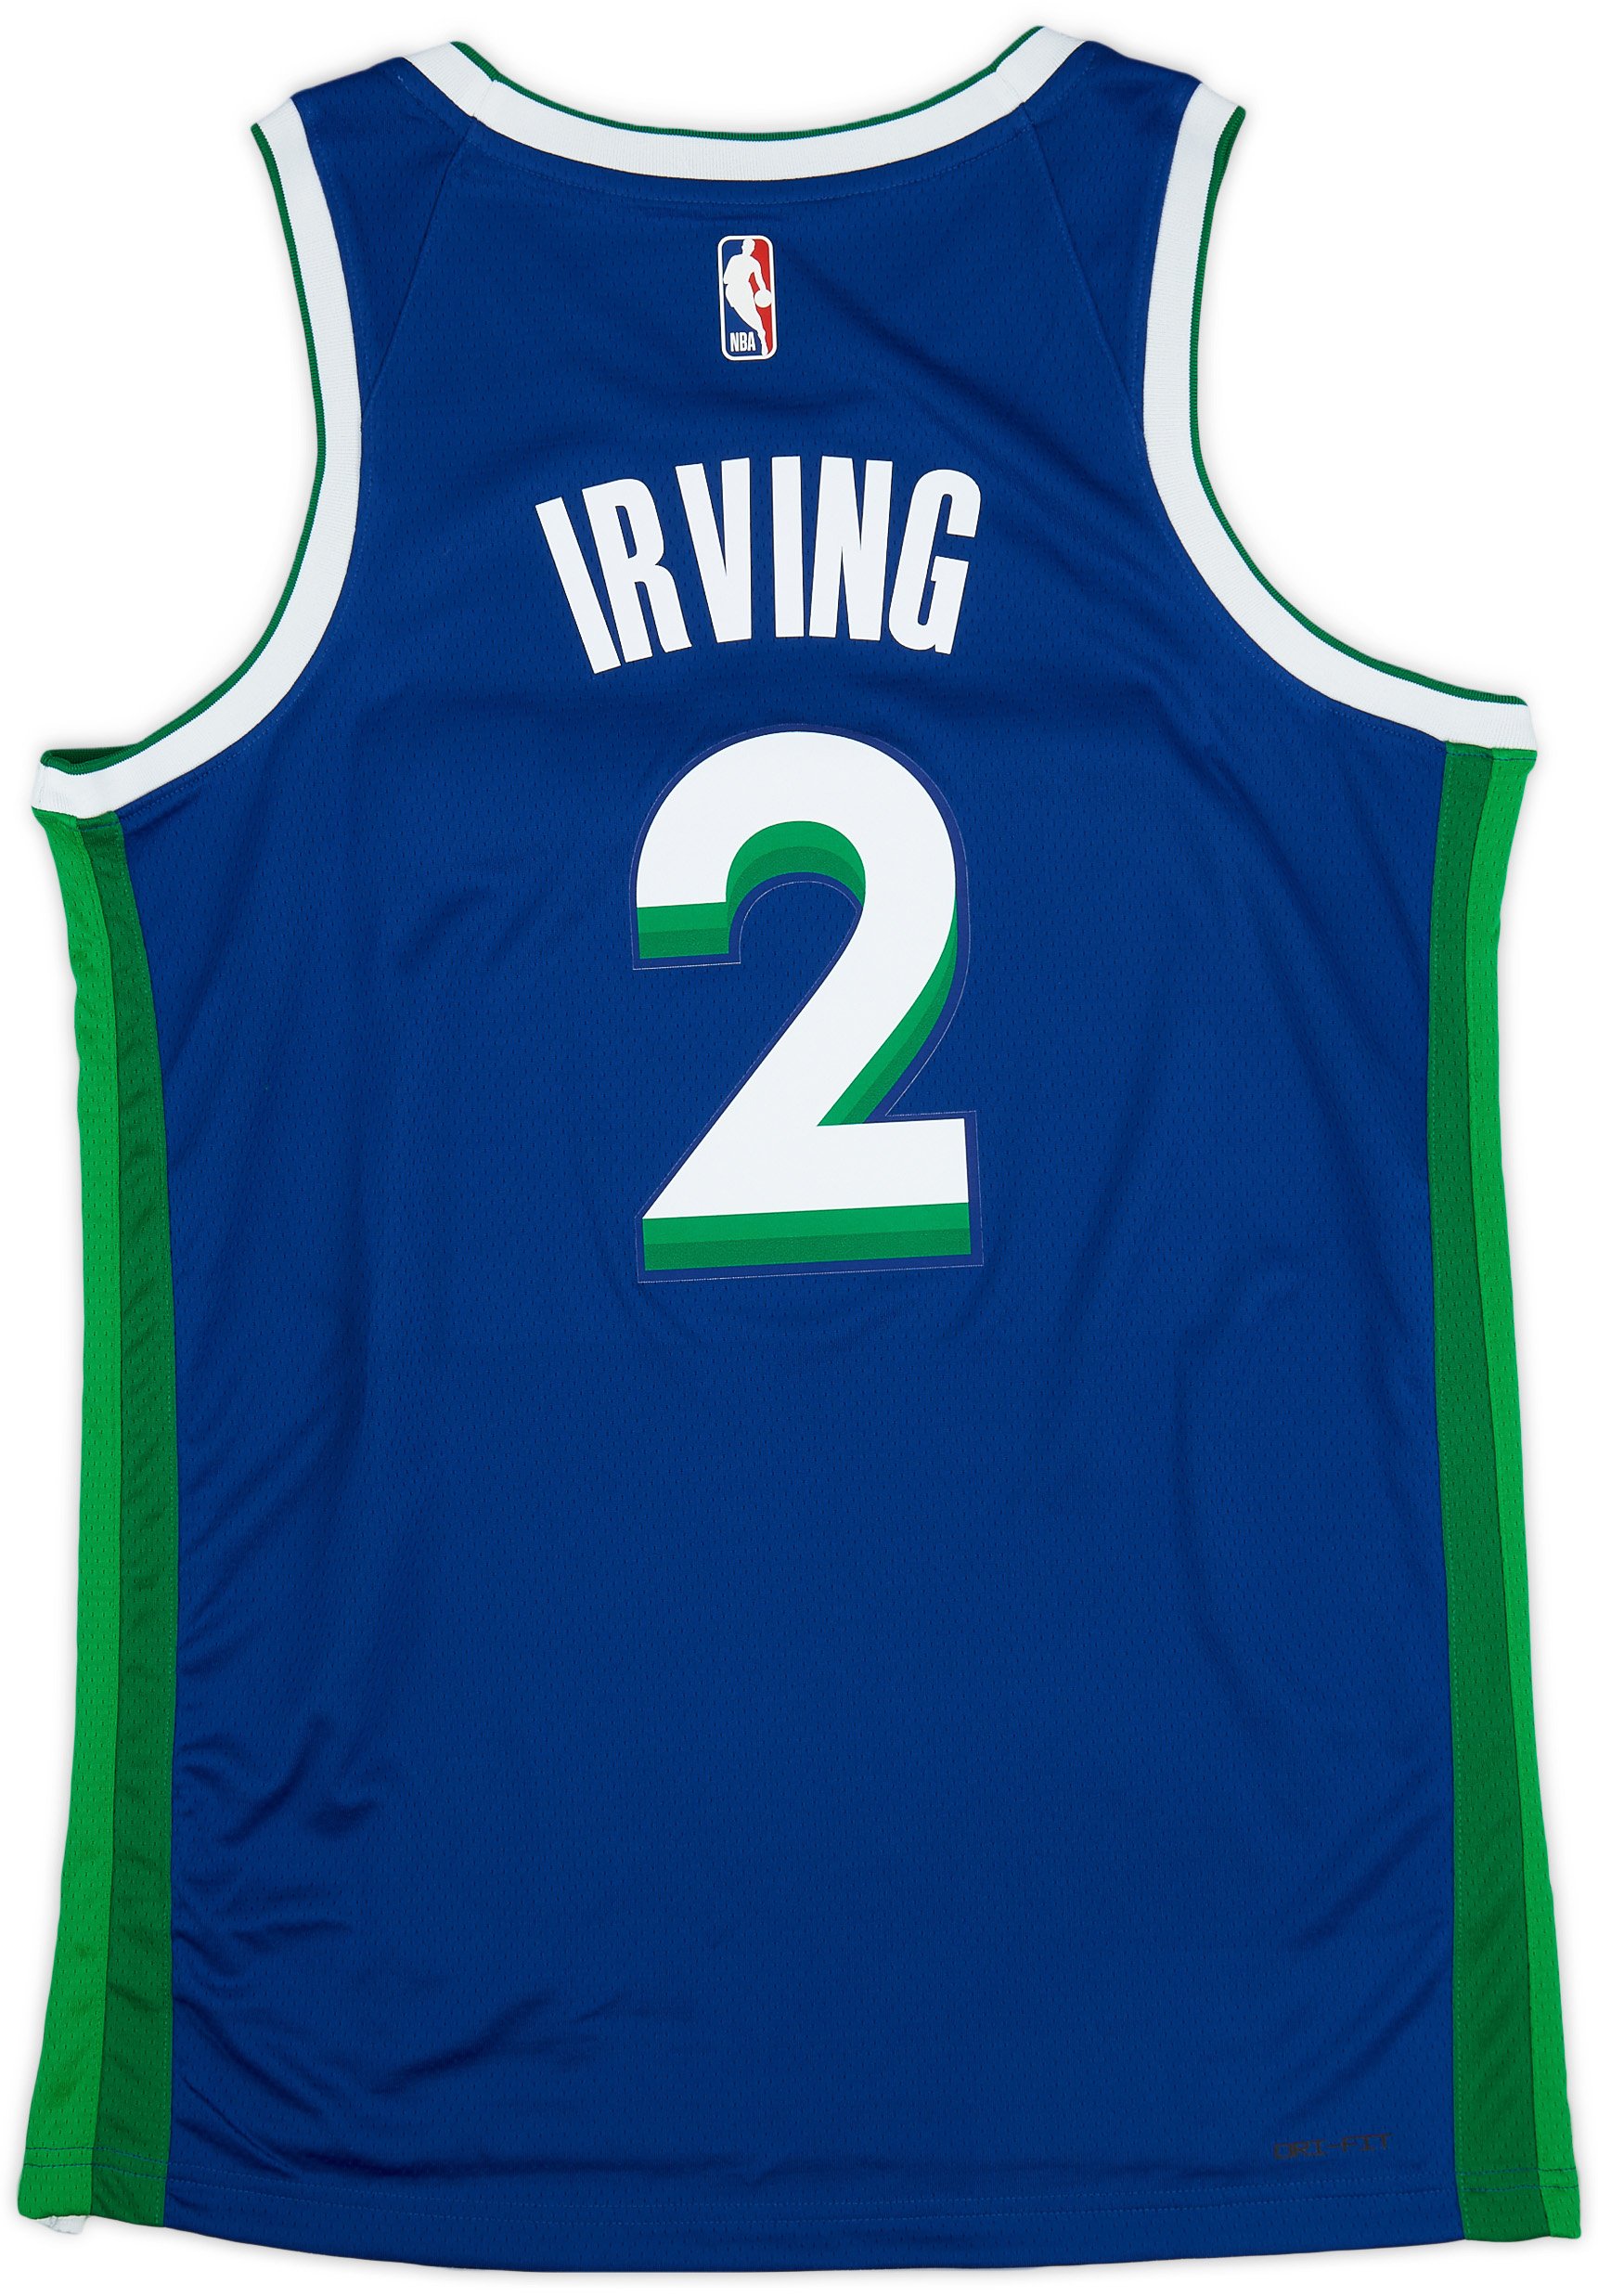 Dallas Mavericks Nike Association Edition Swingman Jersey 22/23